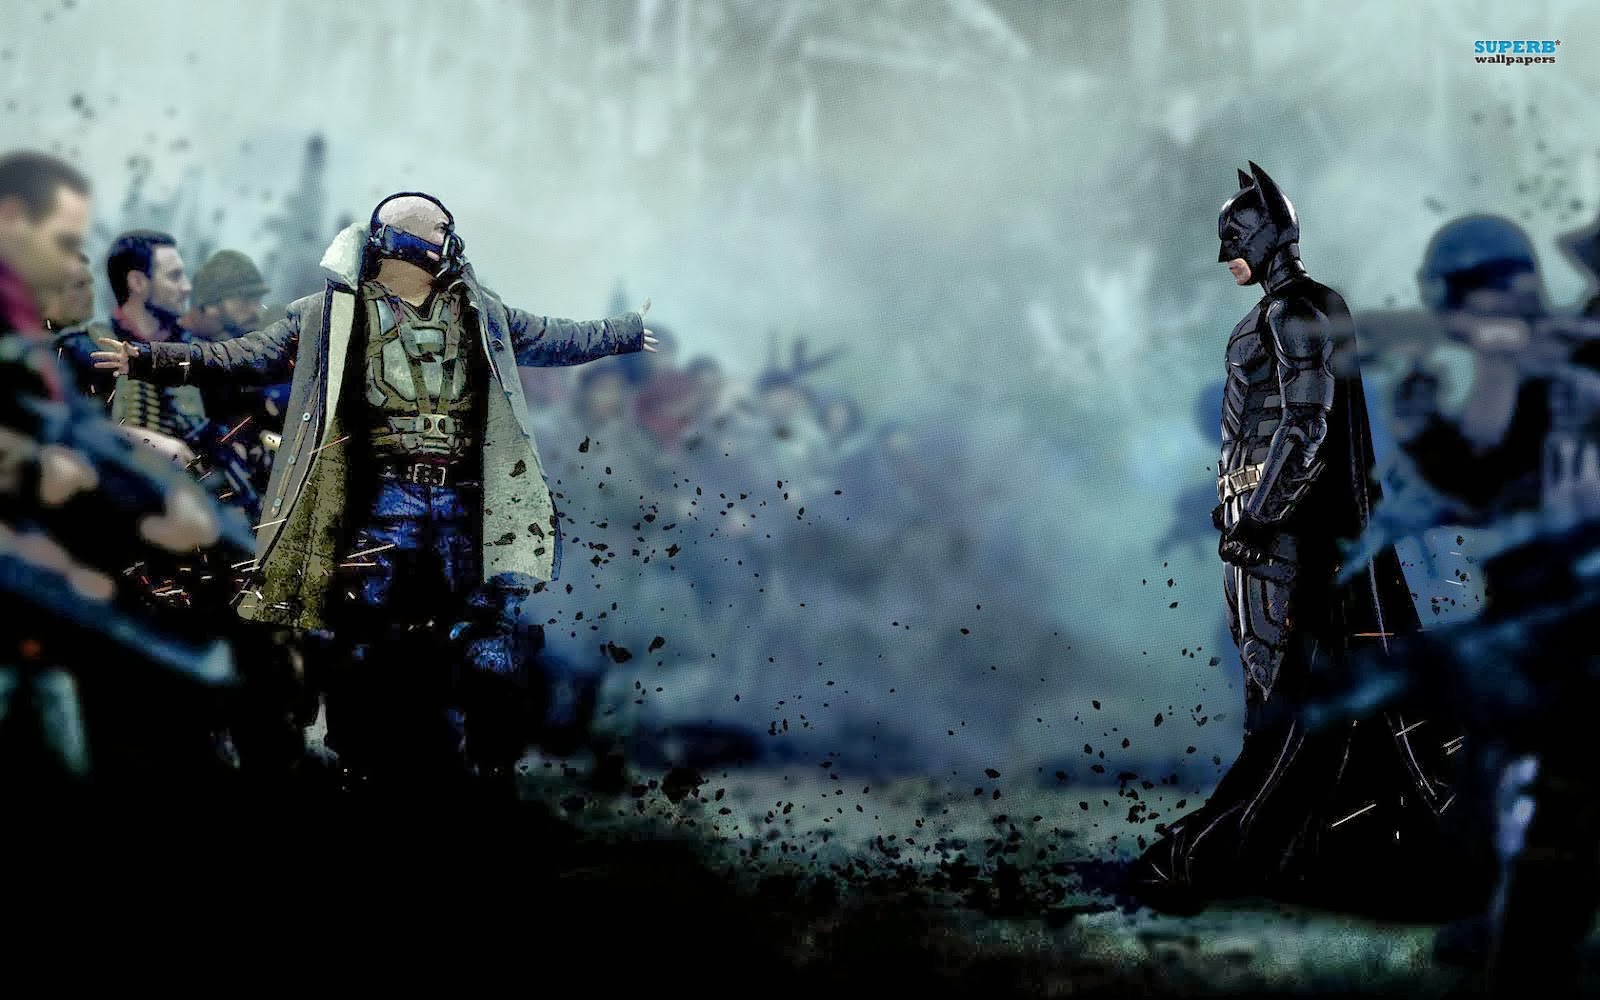 batman the dark knight rises wallpaper,action adventure game,cg artwork,action figure,screenshot,fictional character